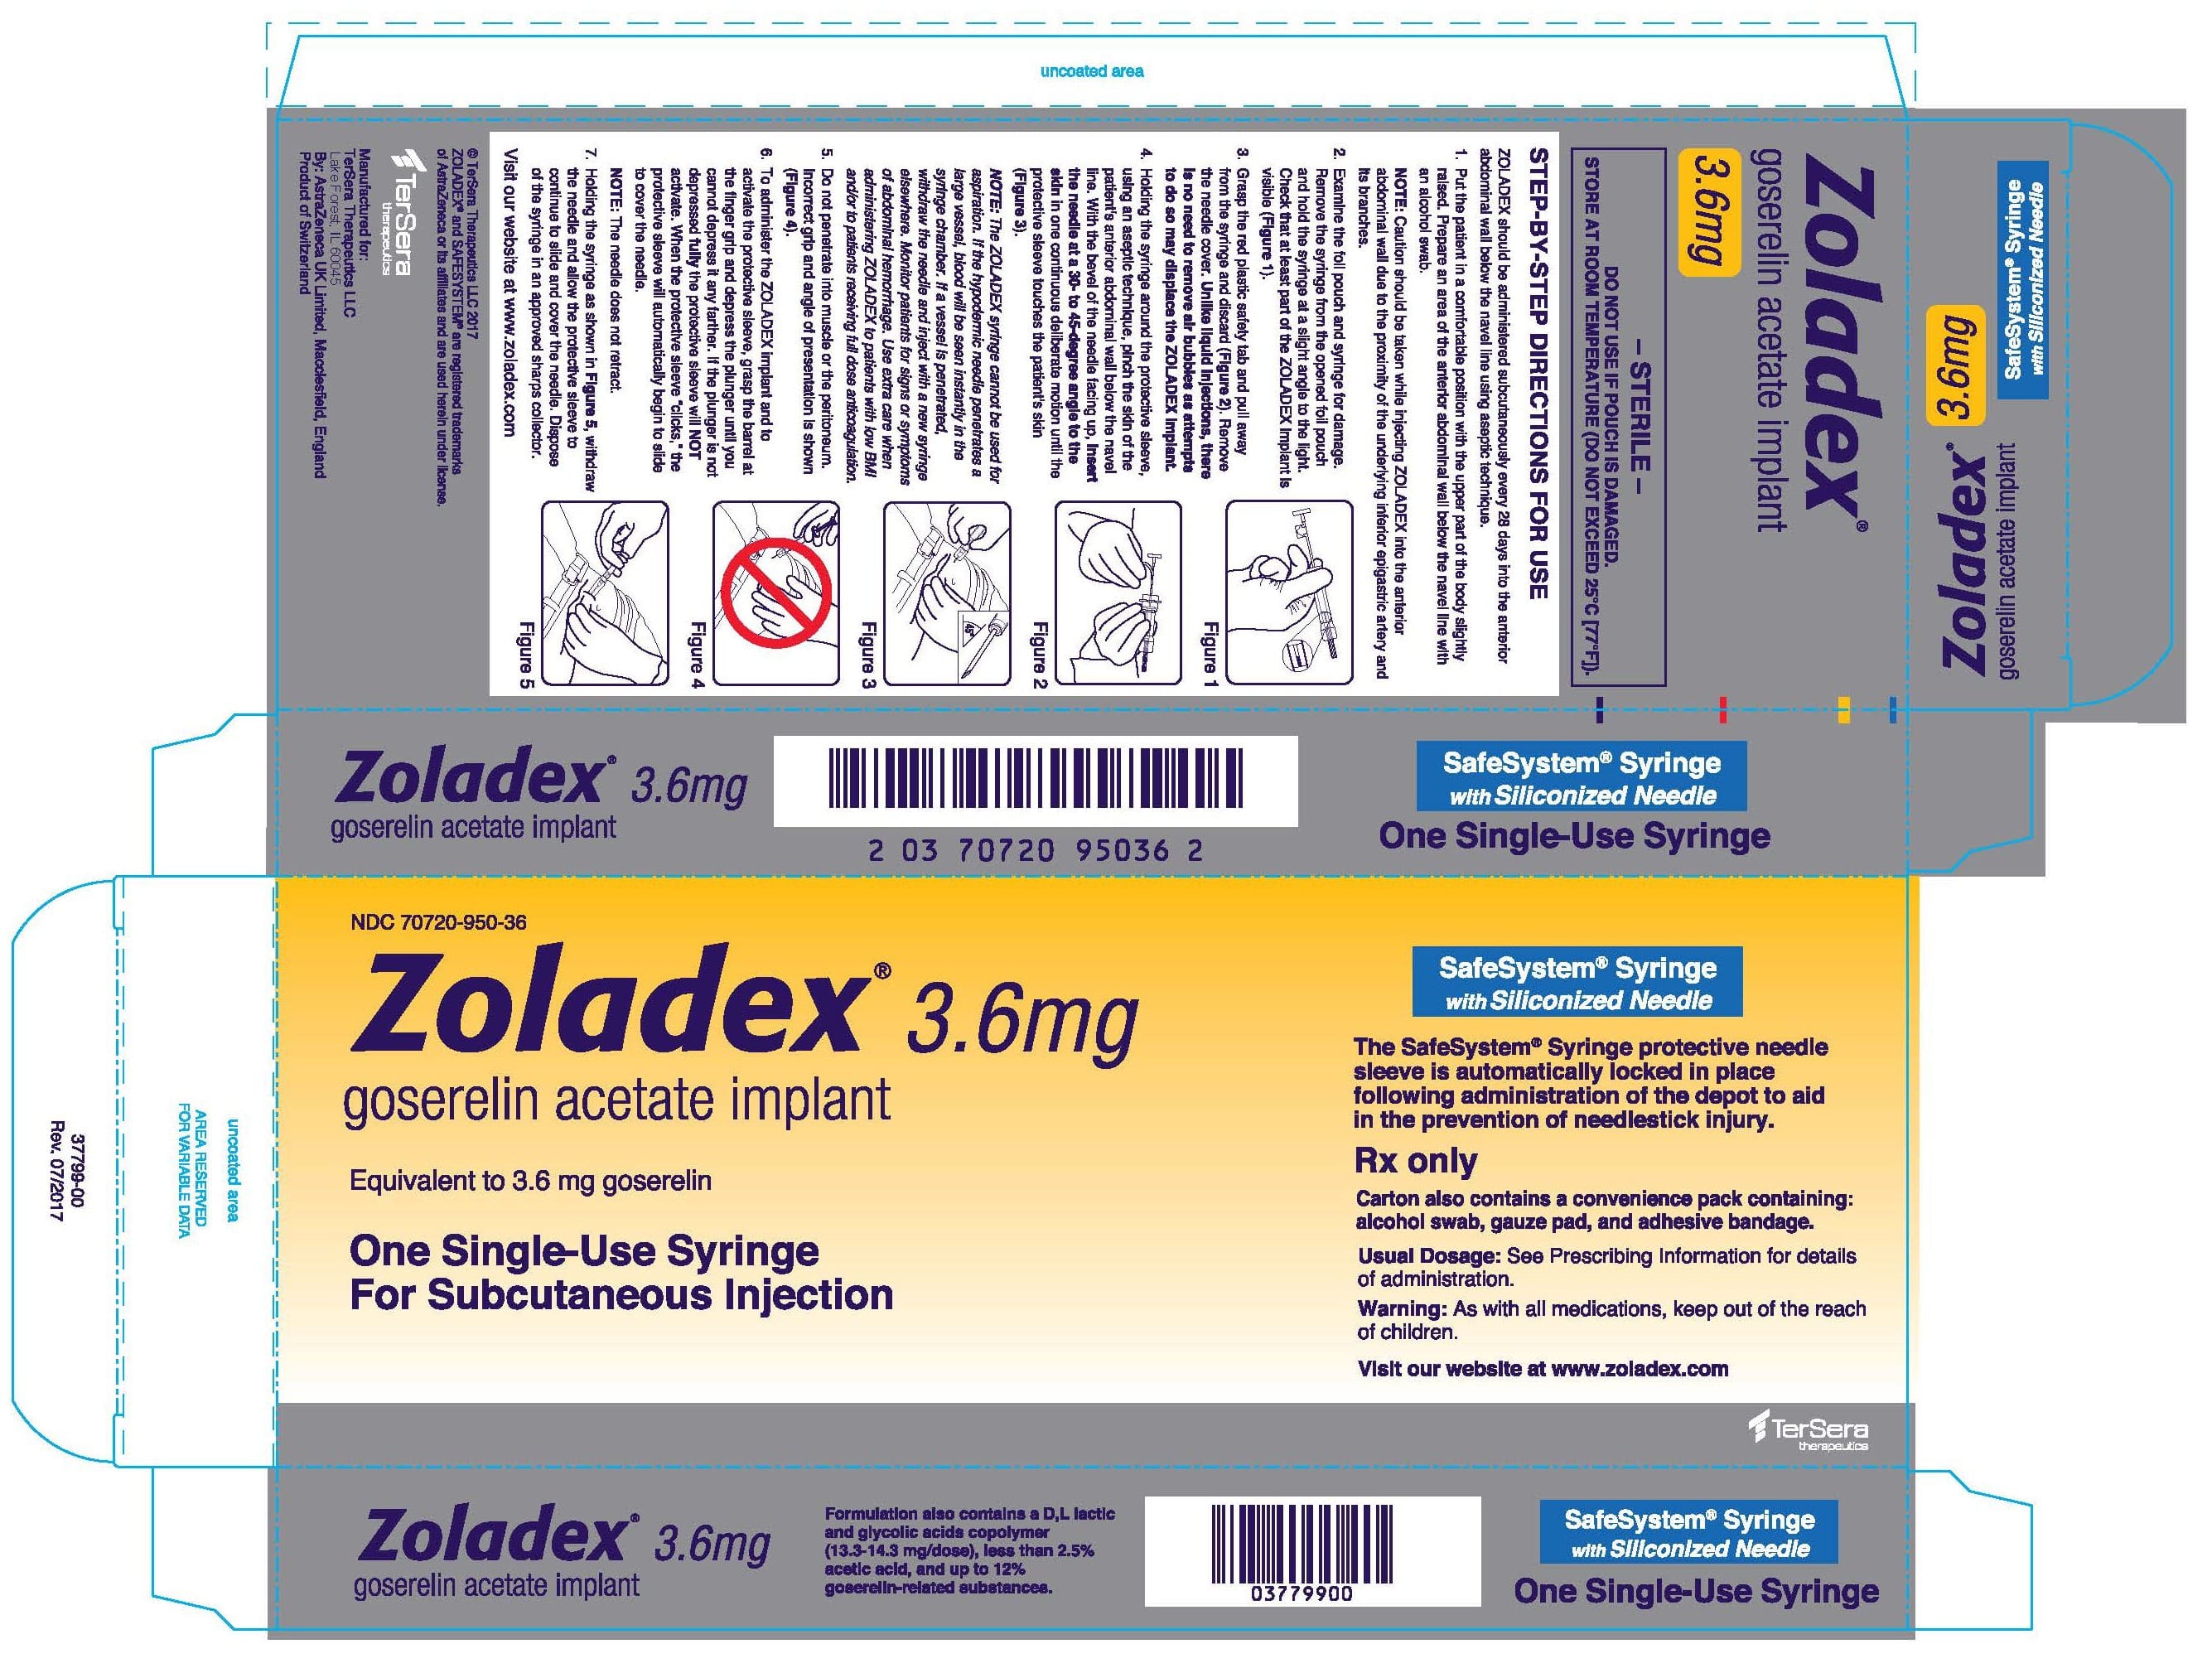 Principal Display Panel - Zoladex Carton Label
